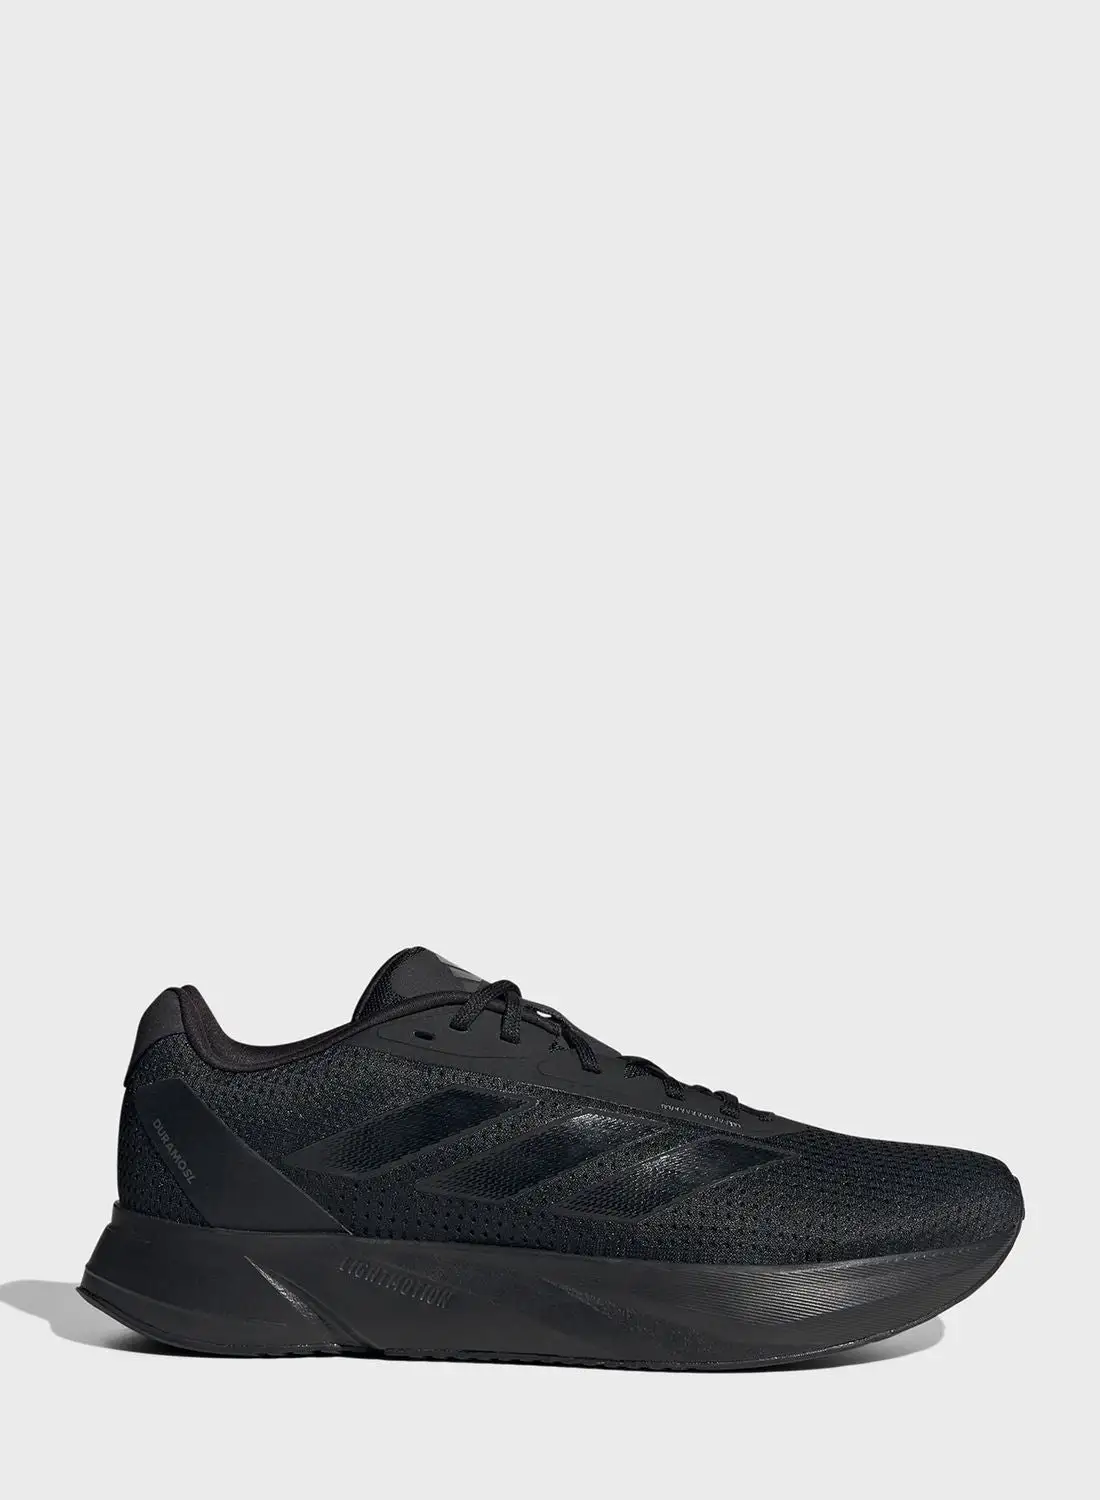 Adidas Duramo Sl Shoes